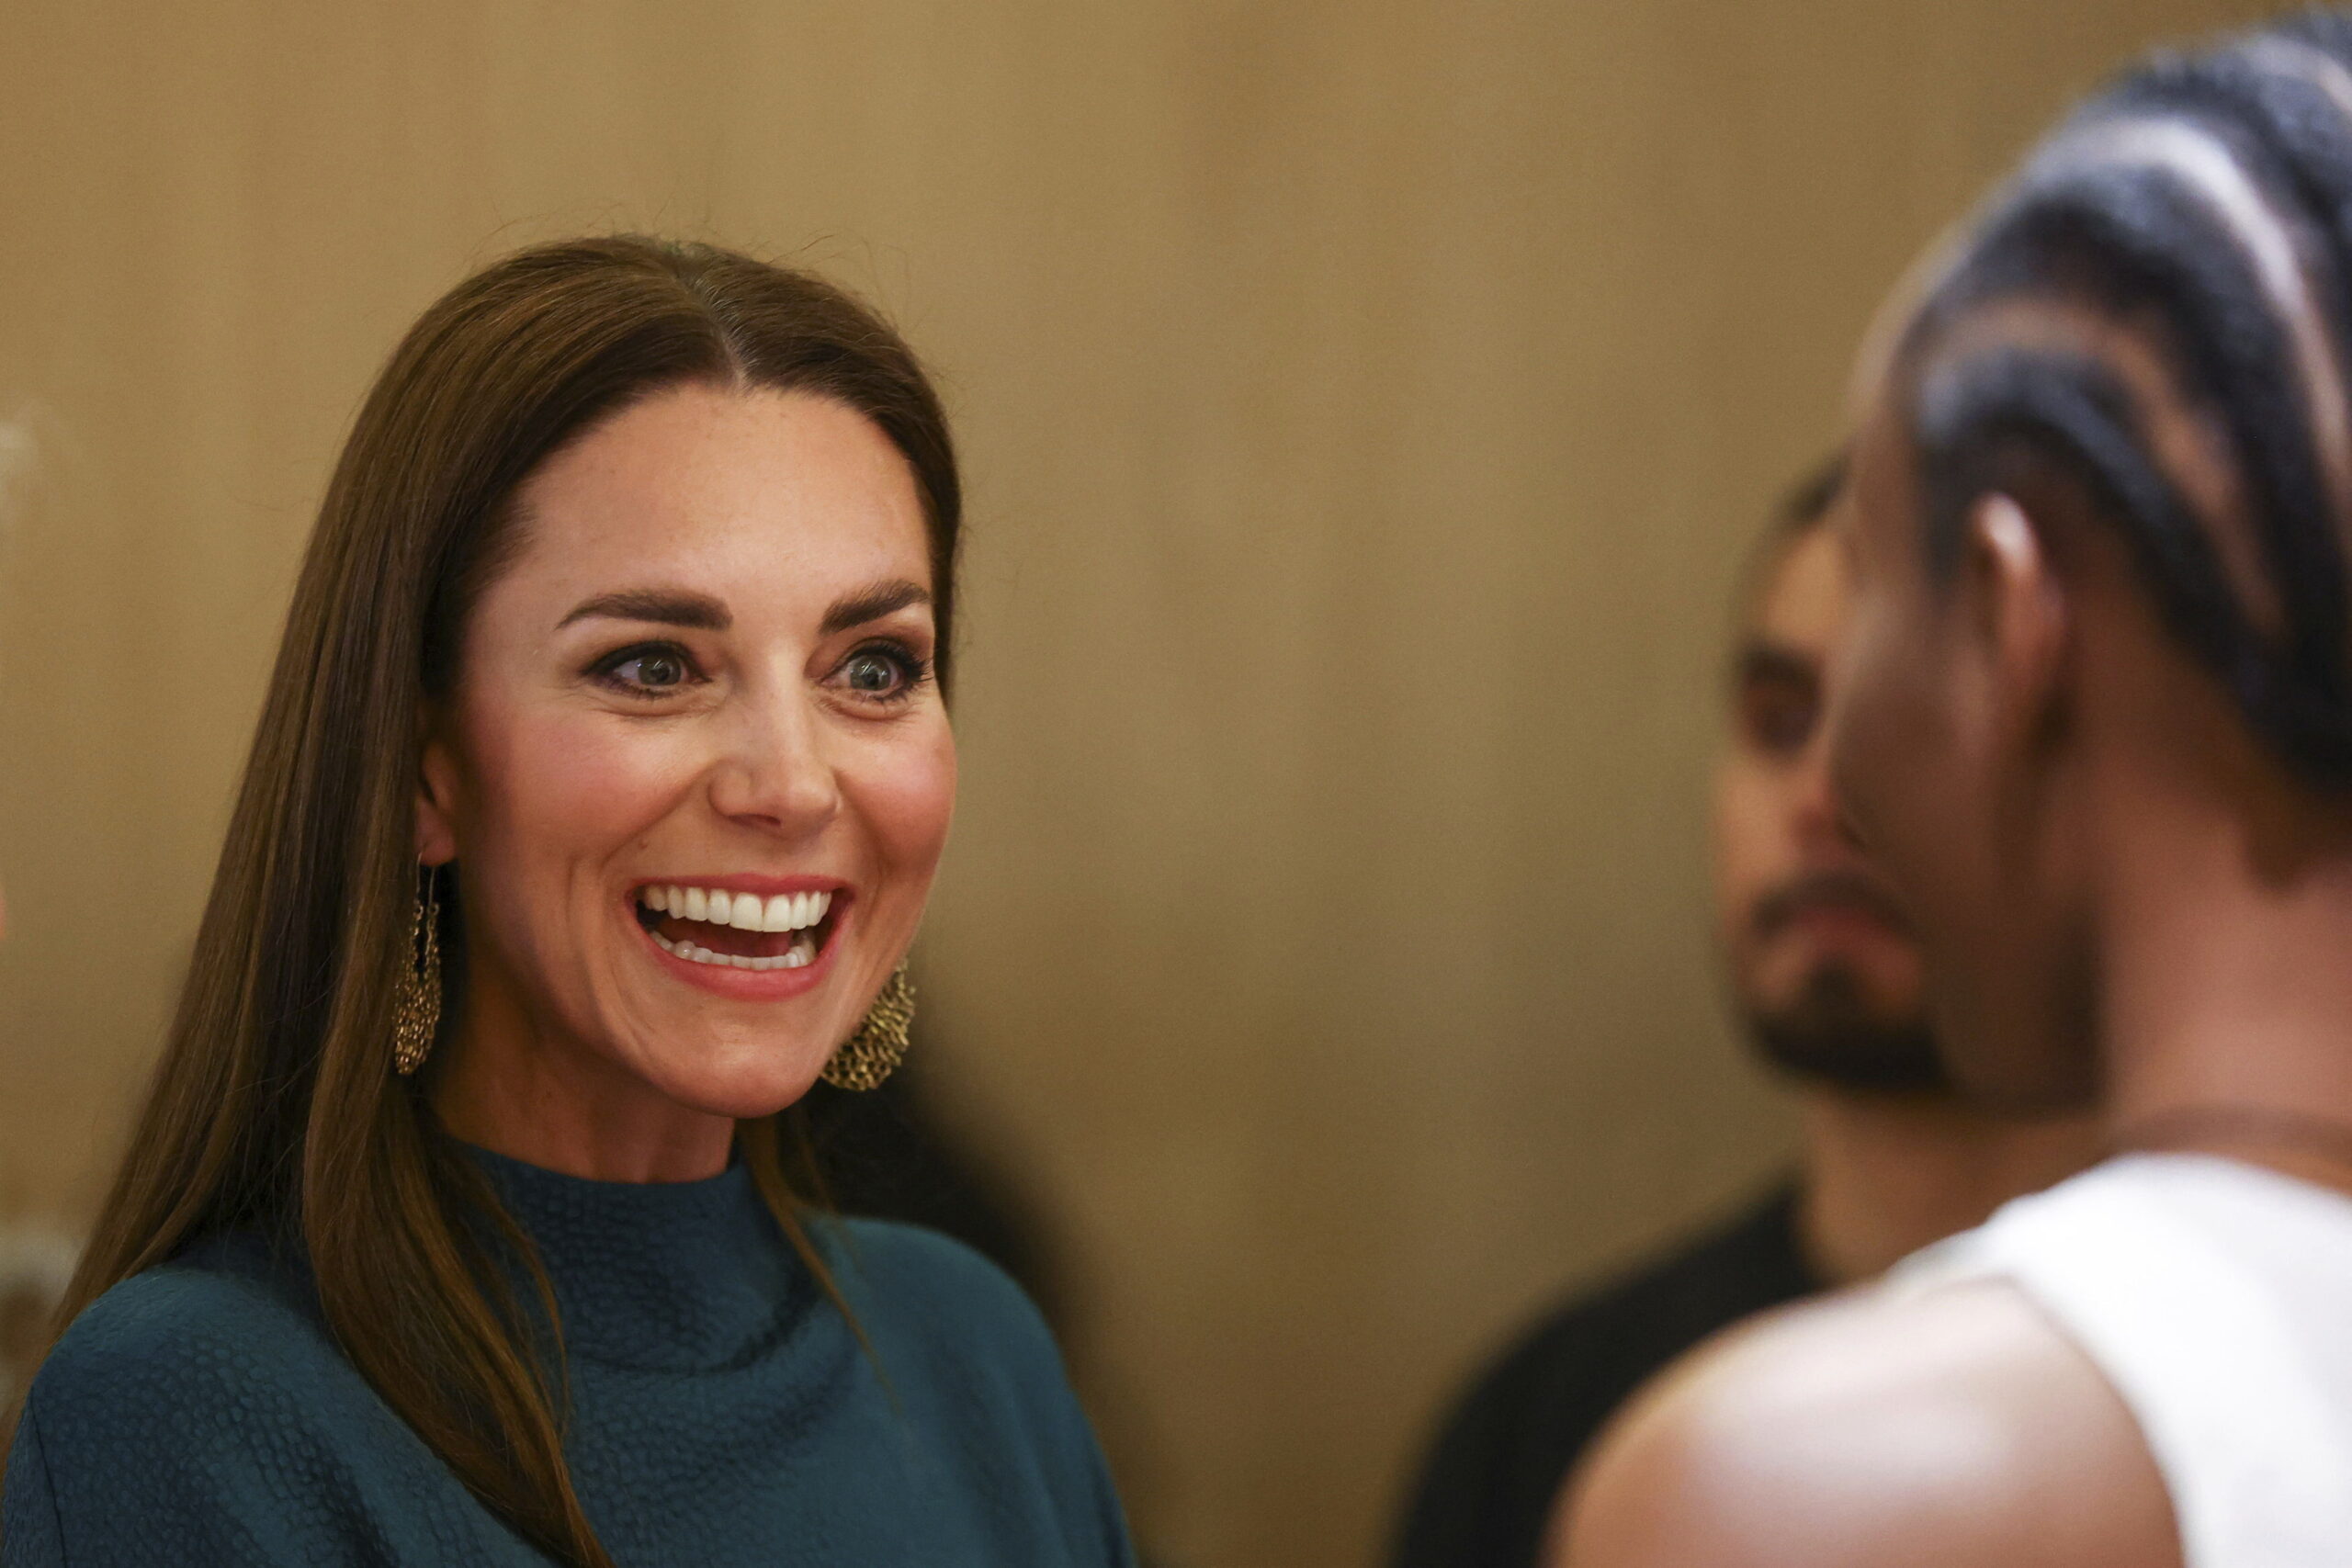 Gb: Kate Middleton al British Fashion Council a Londra